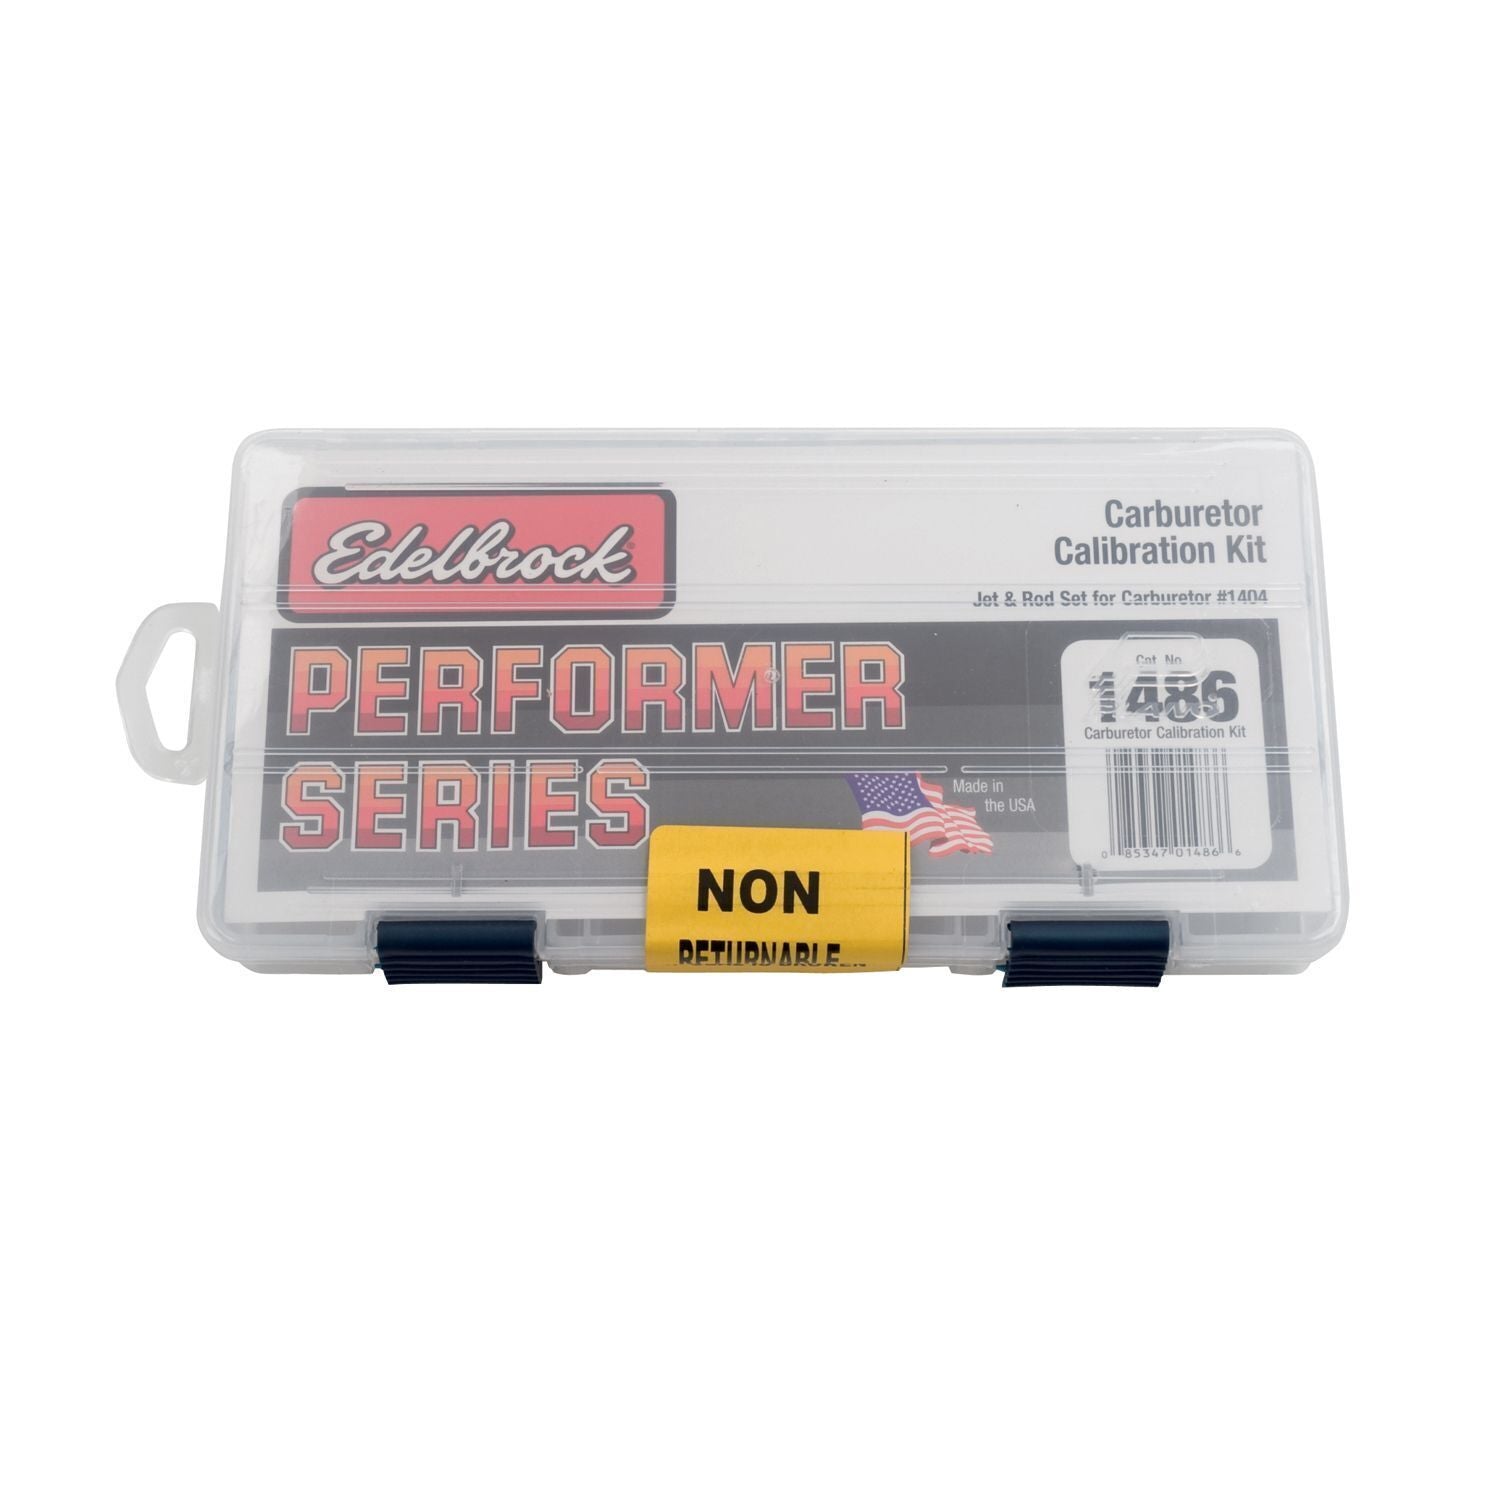 Edelbrock Performer Series Carburetor Calibration Kit # ED1486